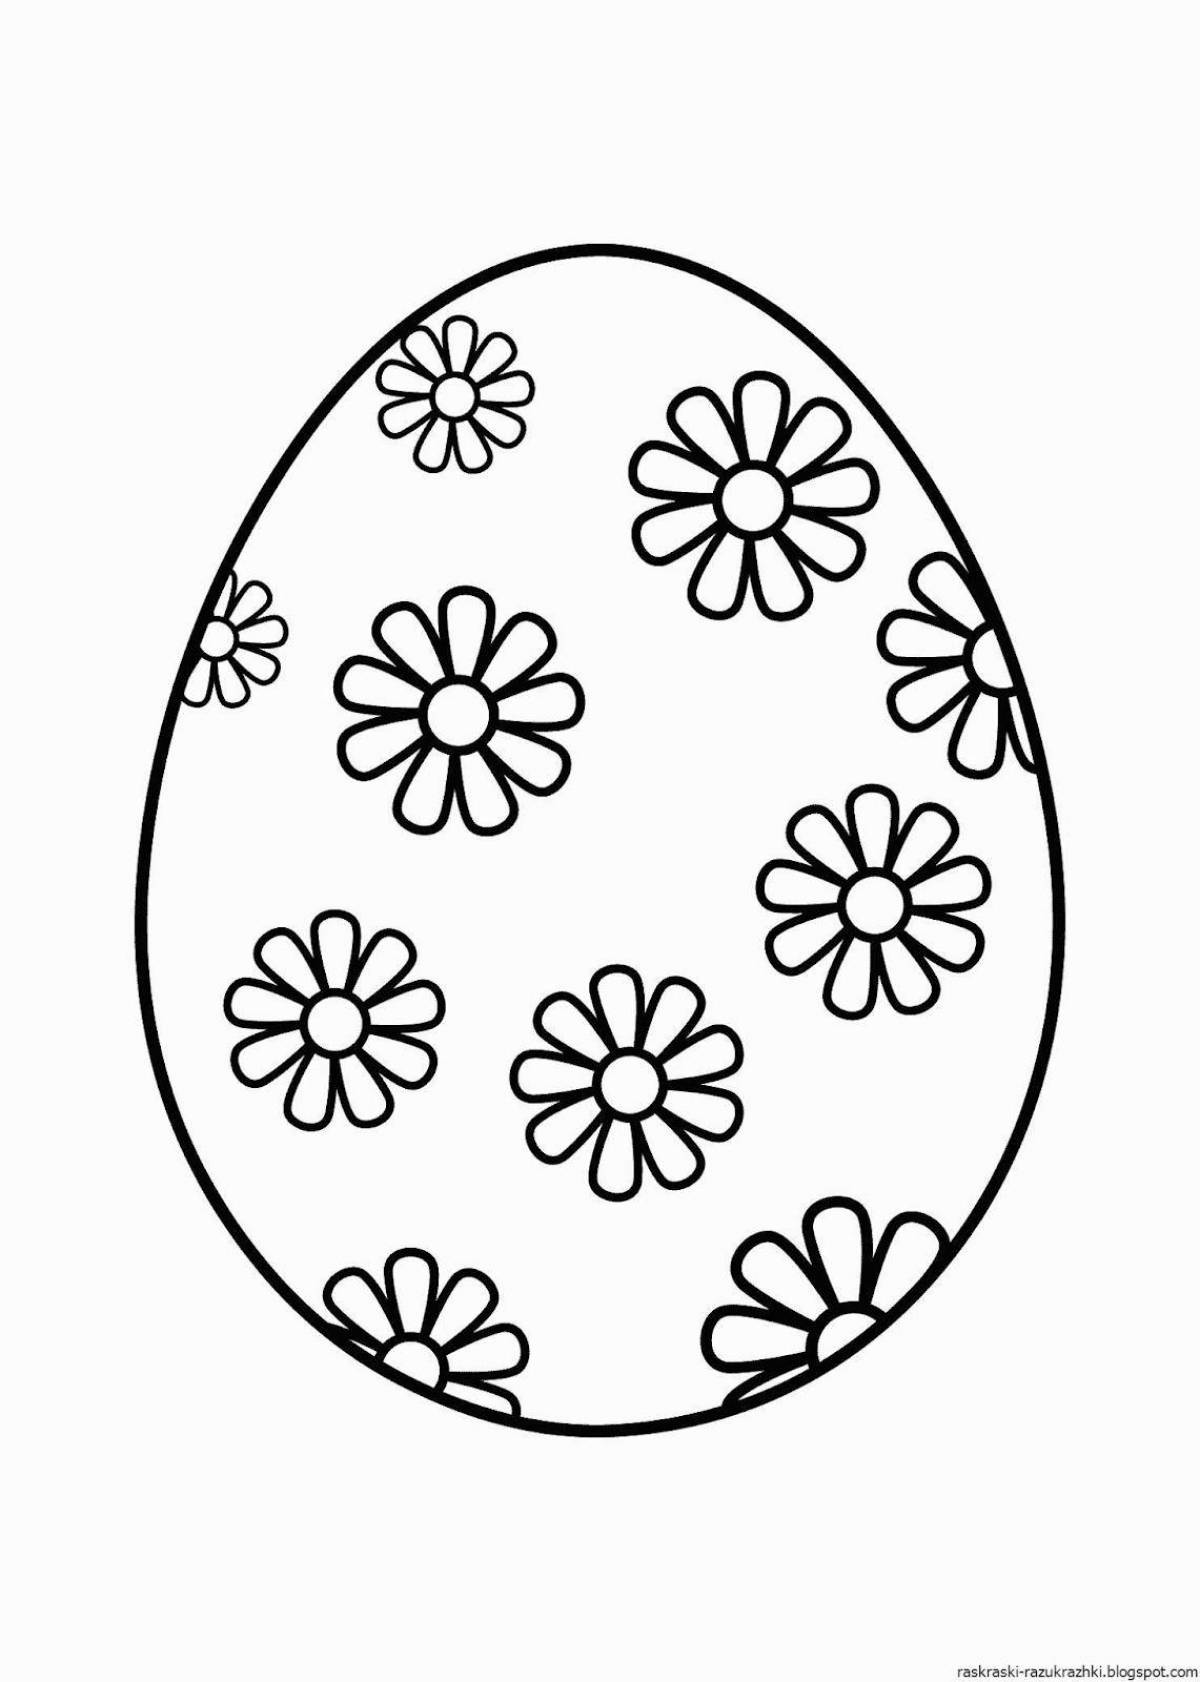 Радостная раскраска яйца для детей